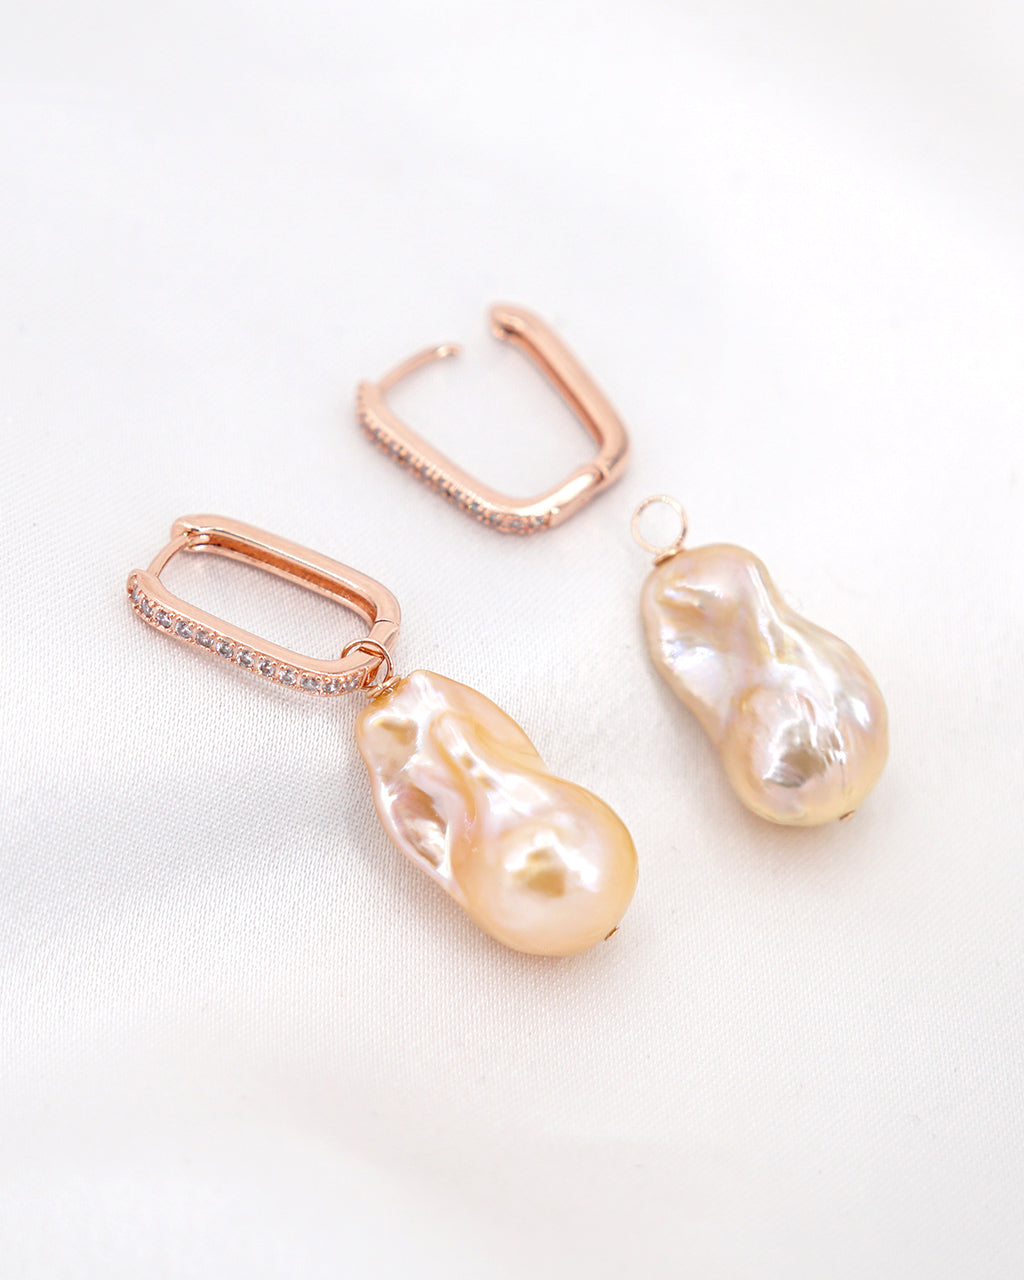 Peach Fuzz Baroque Pearl Earrings in Rose Gold